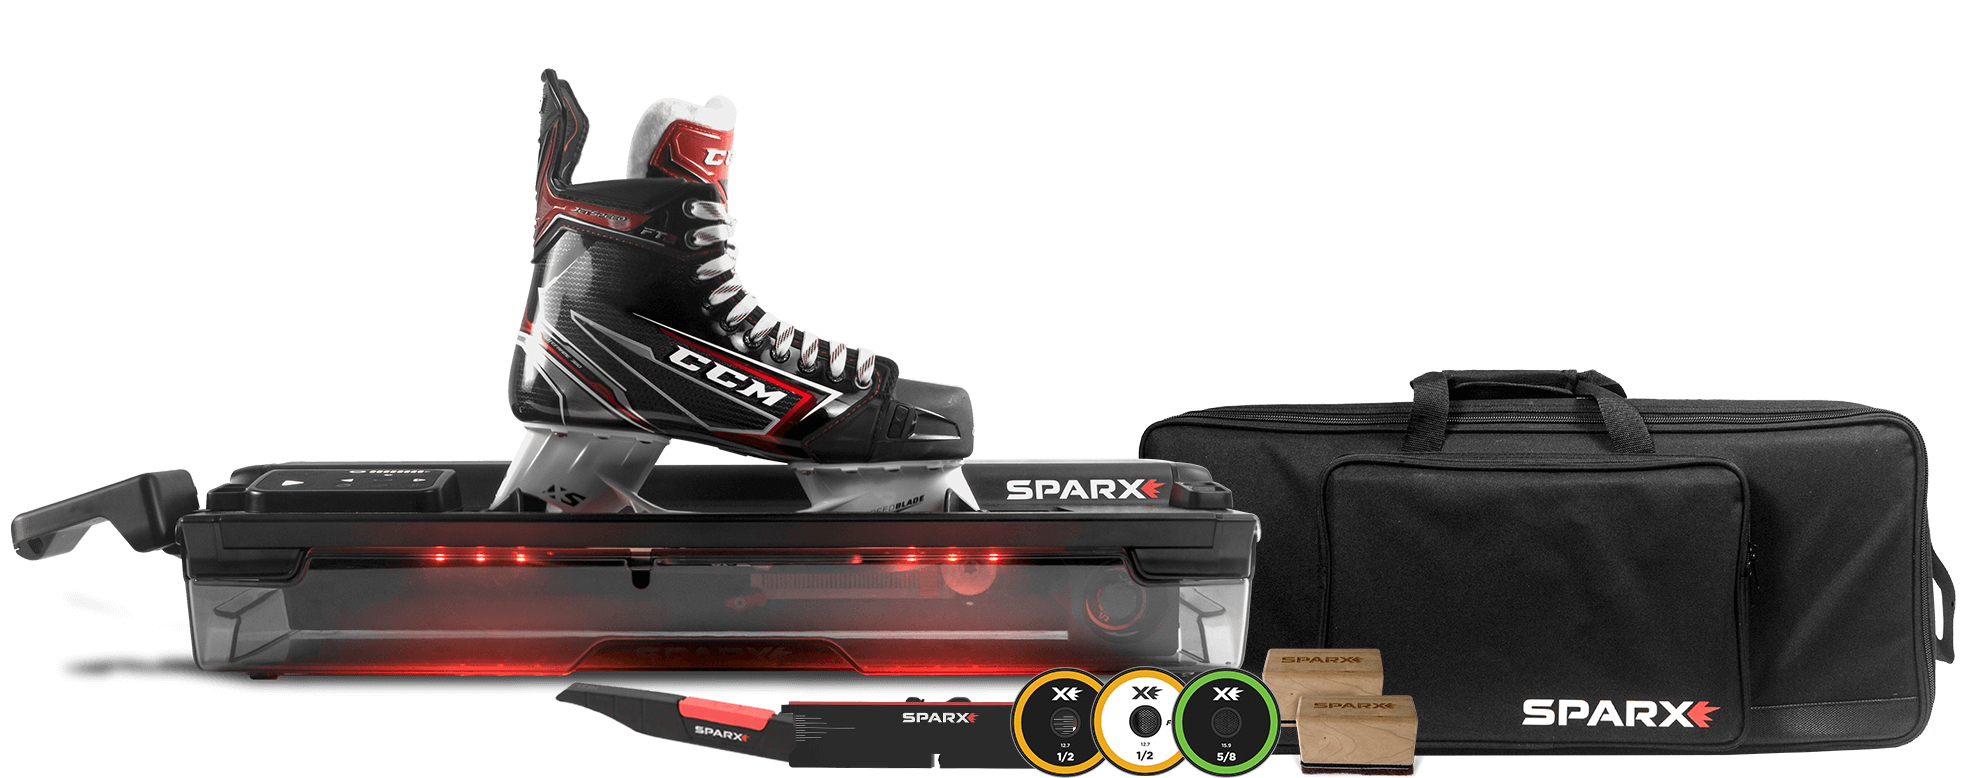 Sparx Skate Sharpener - Is It Worth It? 